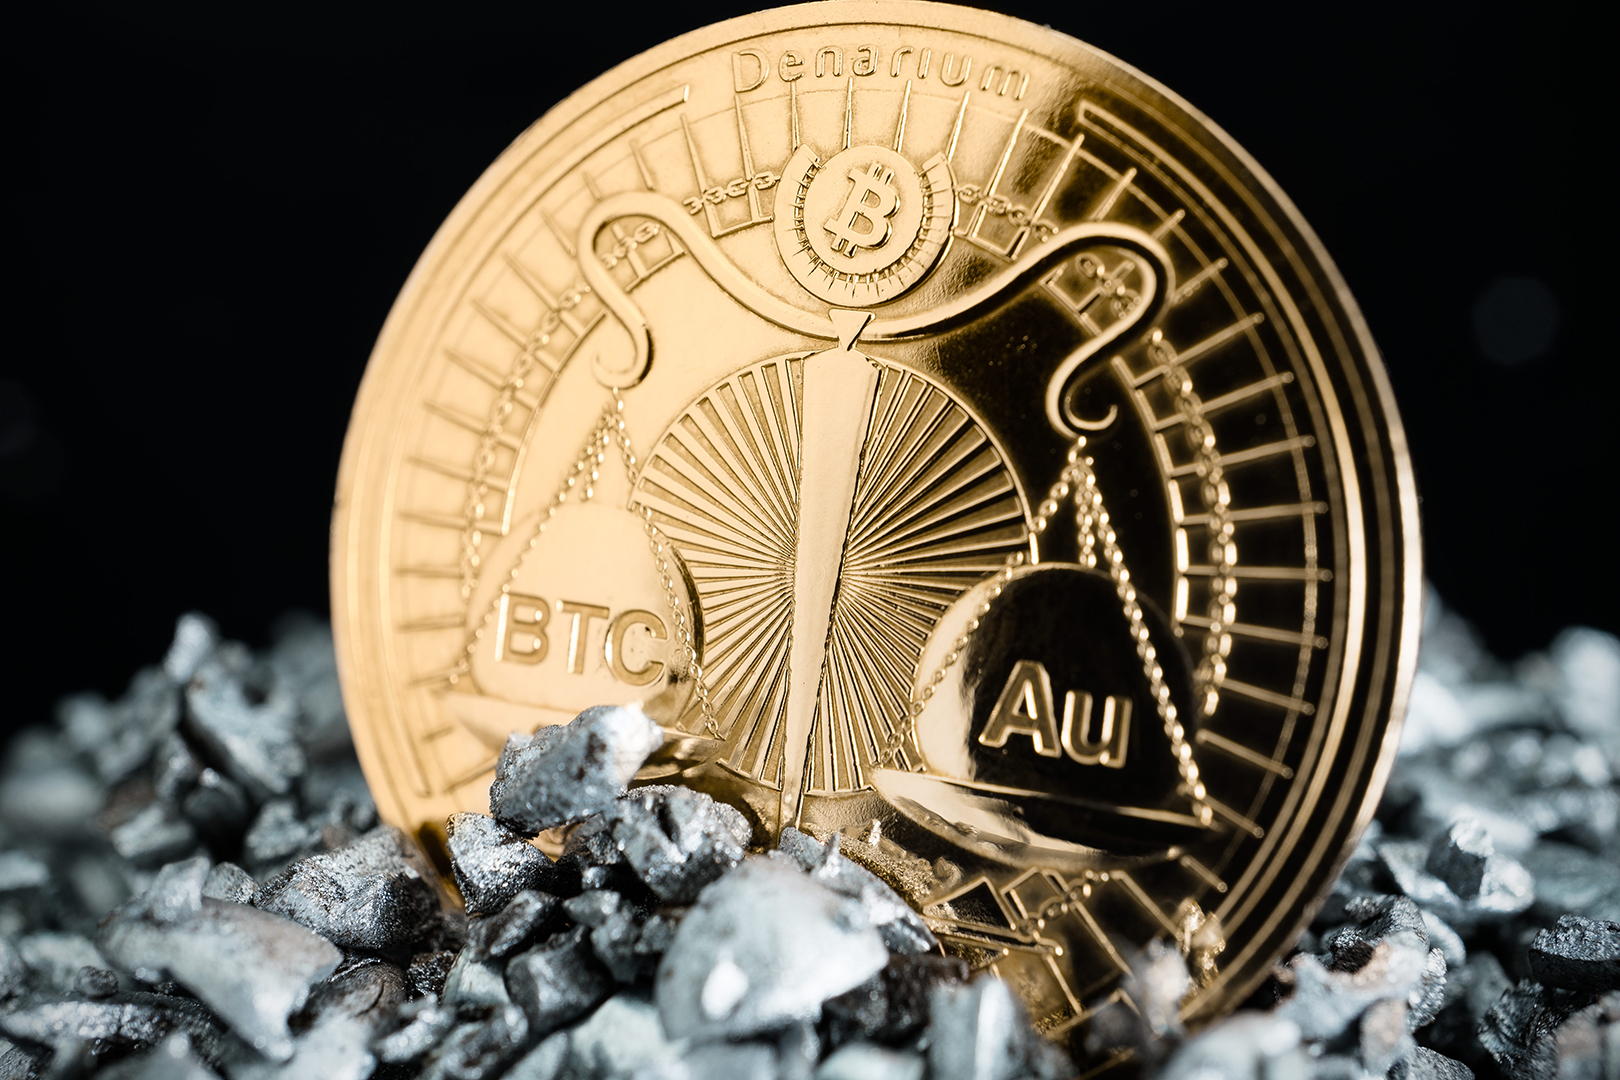 Thumbnail for File:Denarium-Bitcoin-Gold-parity-Coin-promo-3.jpg